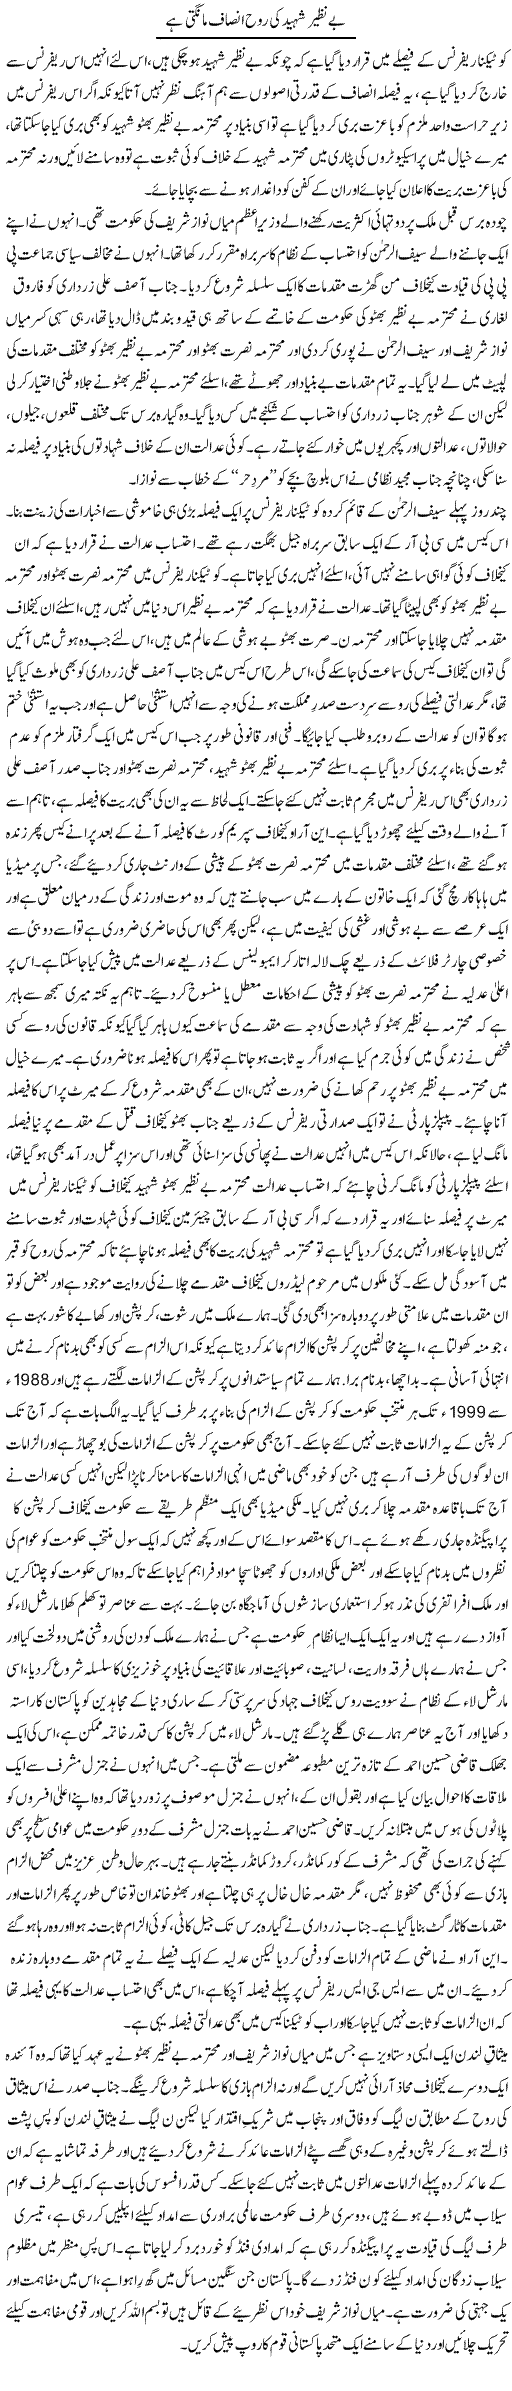 Benazir Bhutto Express Column Asadullah Ghalib 24 September 2011